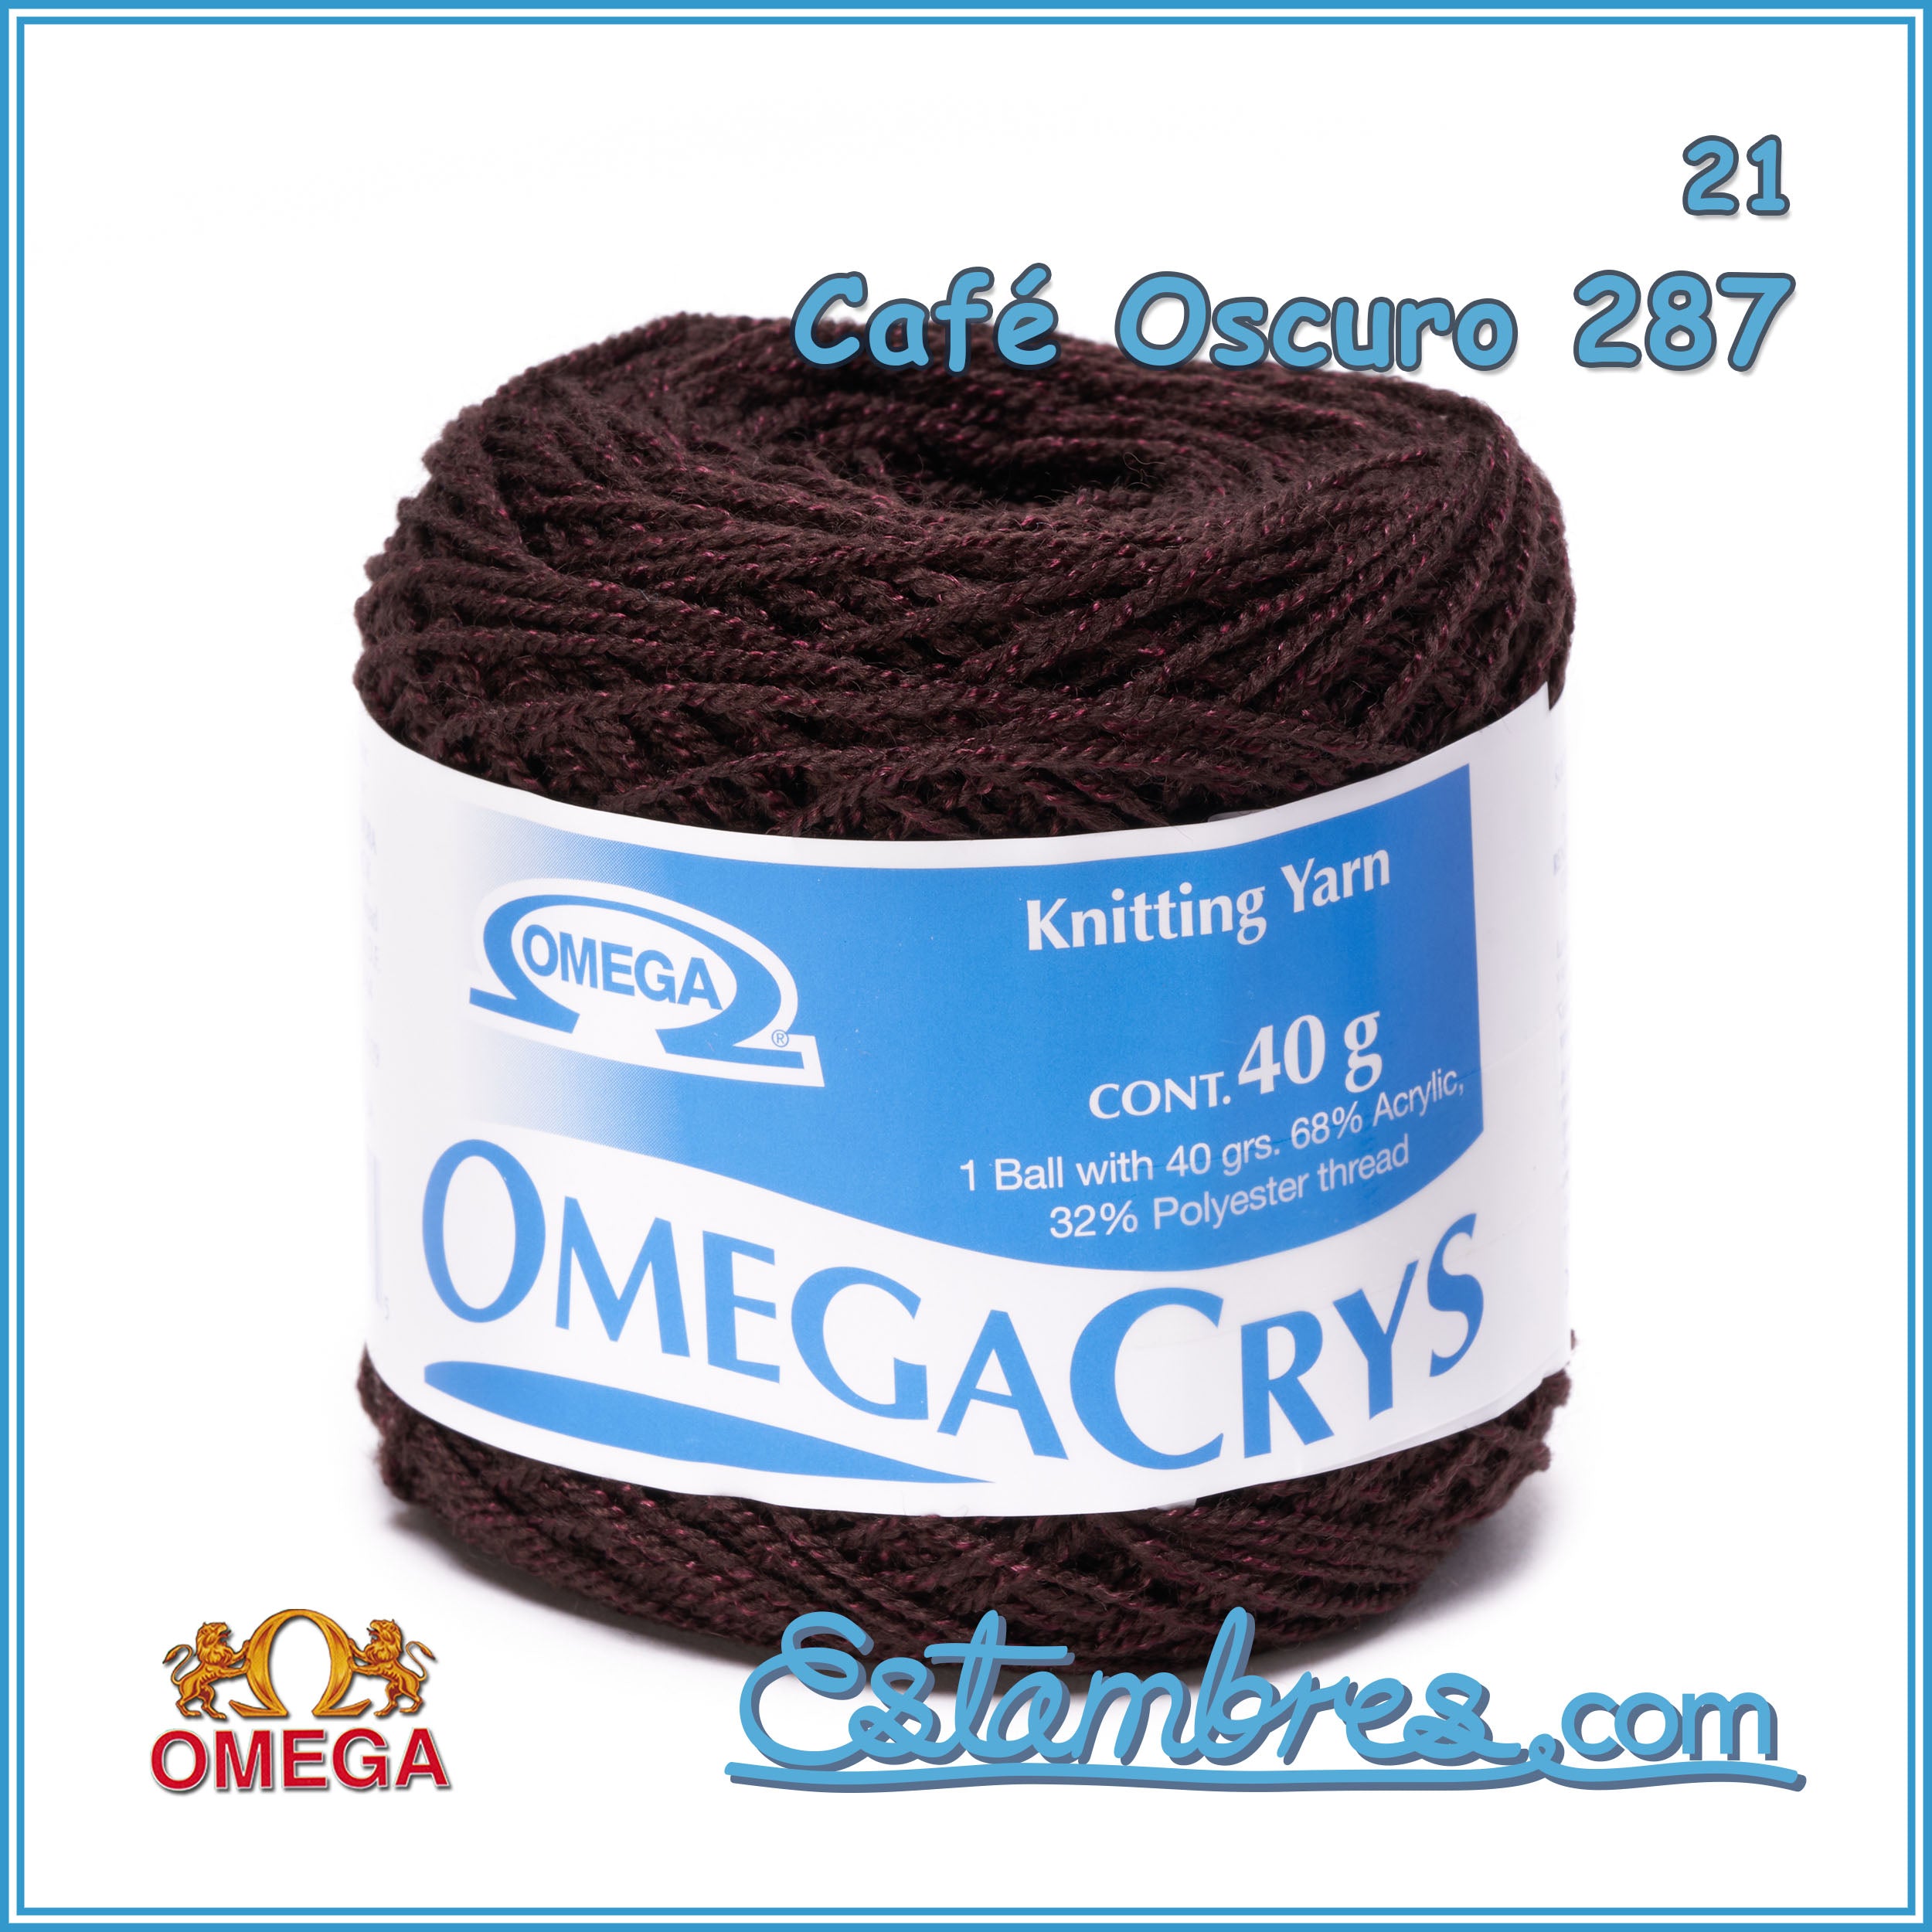 Omegacryl Yarn – ErikaCreativa